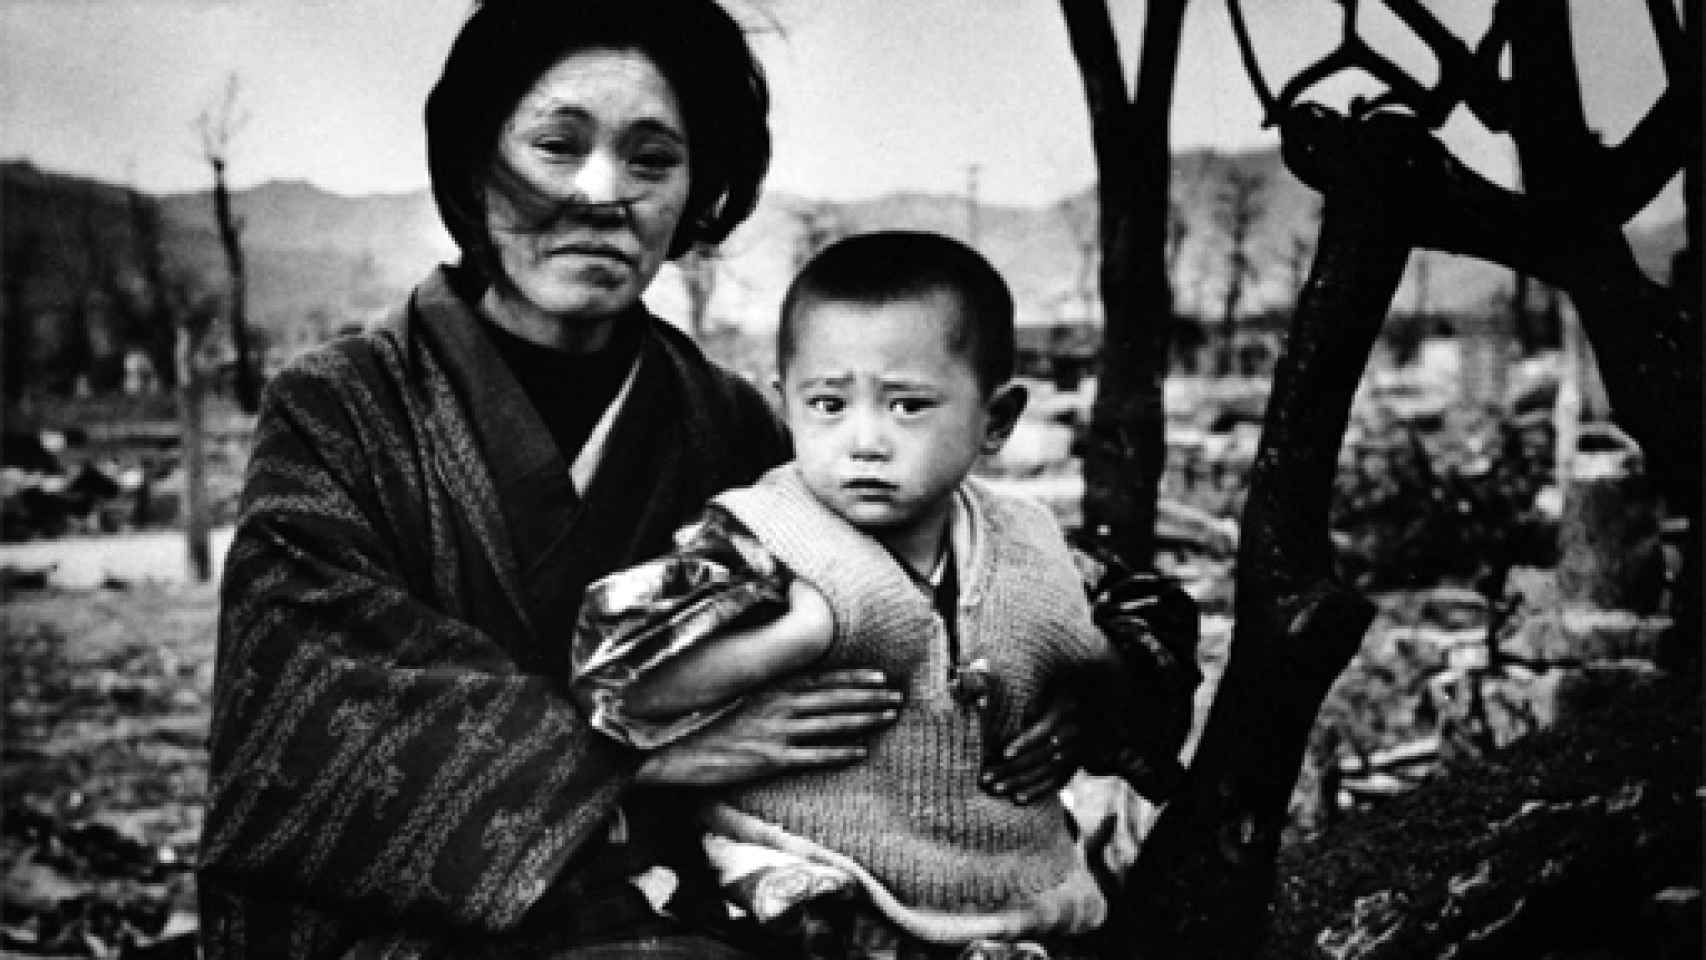 Image: Sobrevivir a Hiroshima